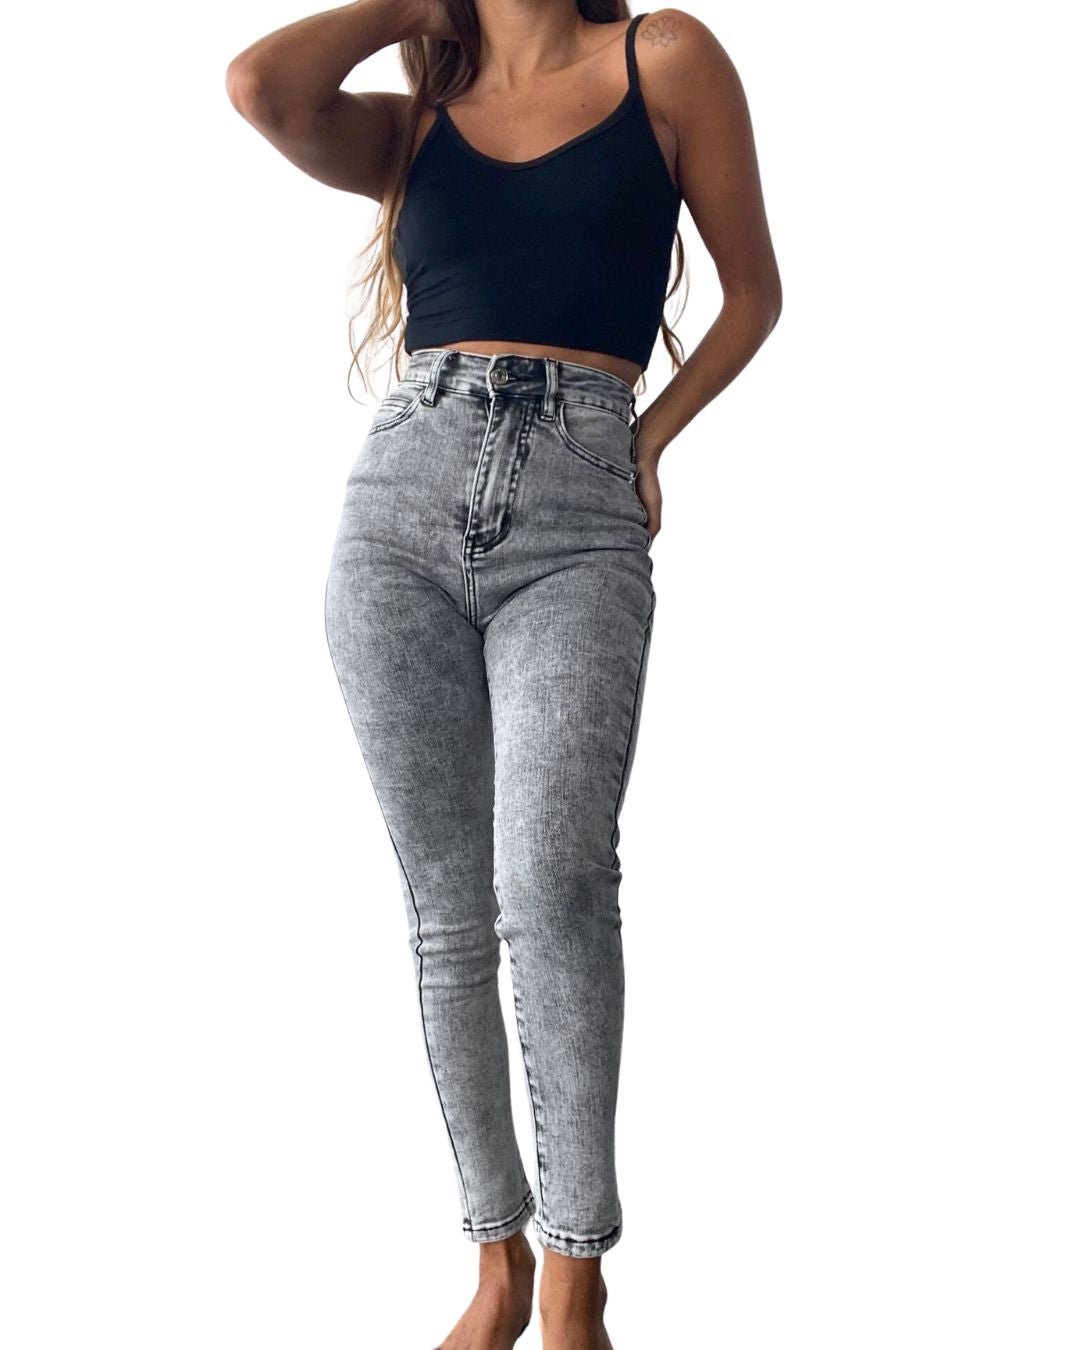 Golden High-Rise Skinny Jean #FlatteringFit Chipre – Denim Basic